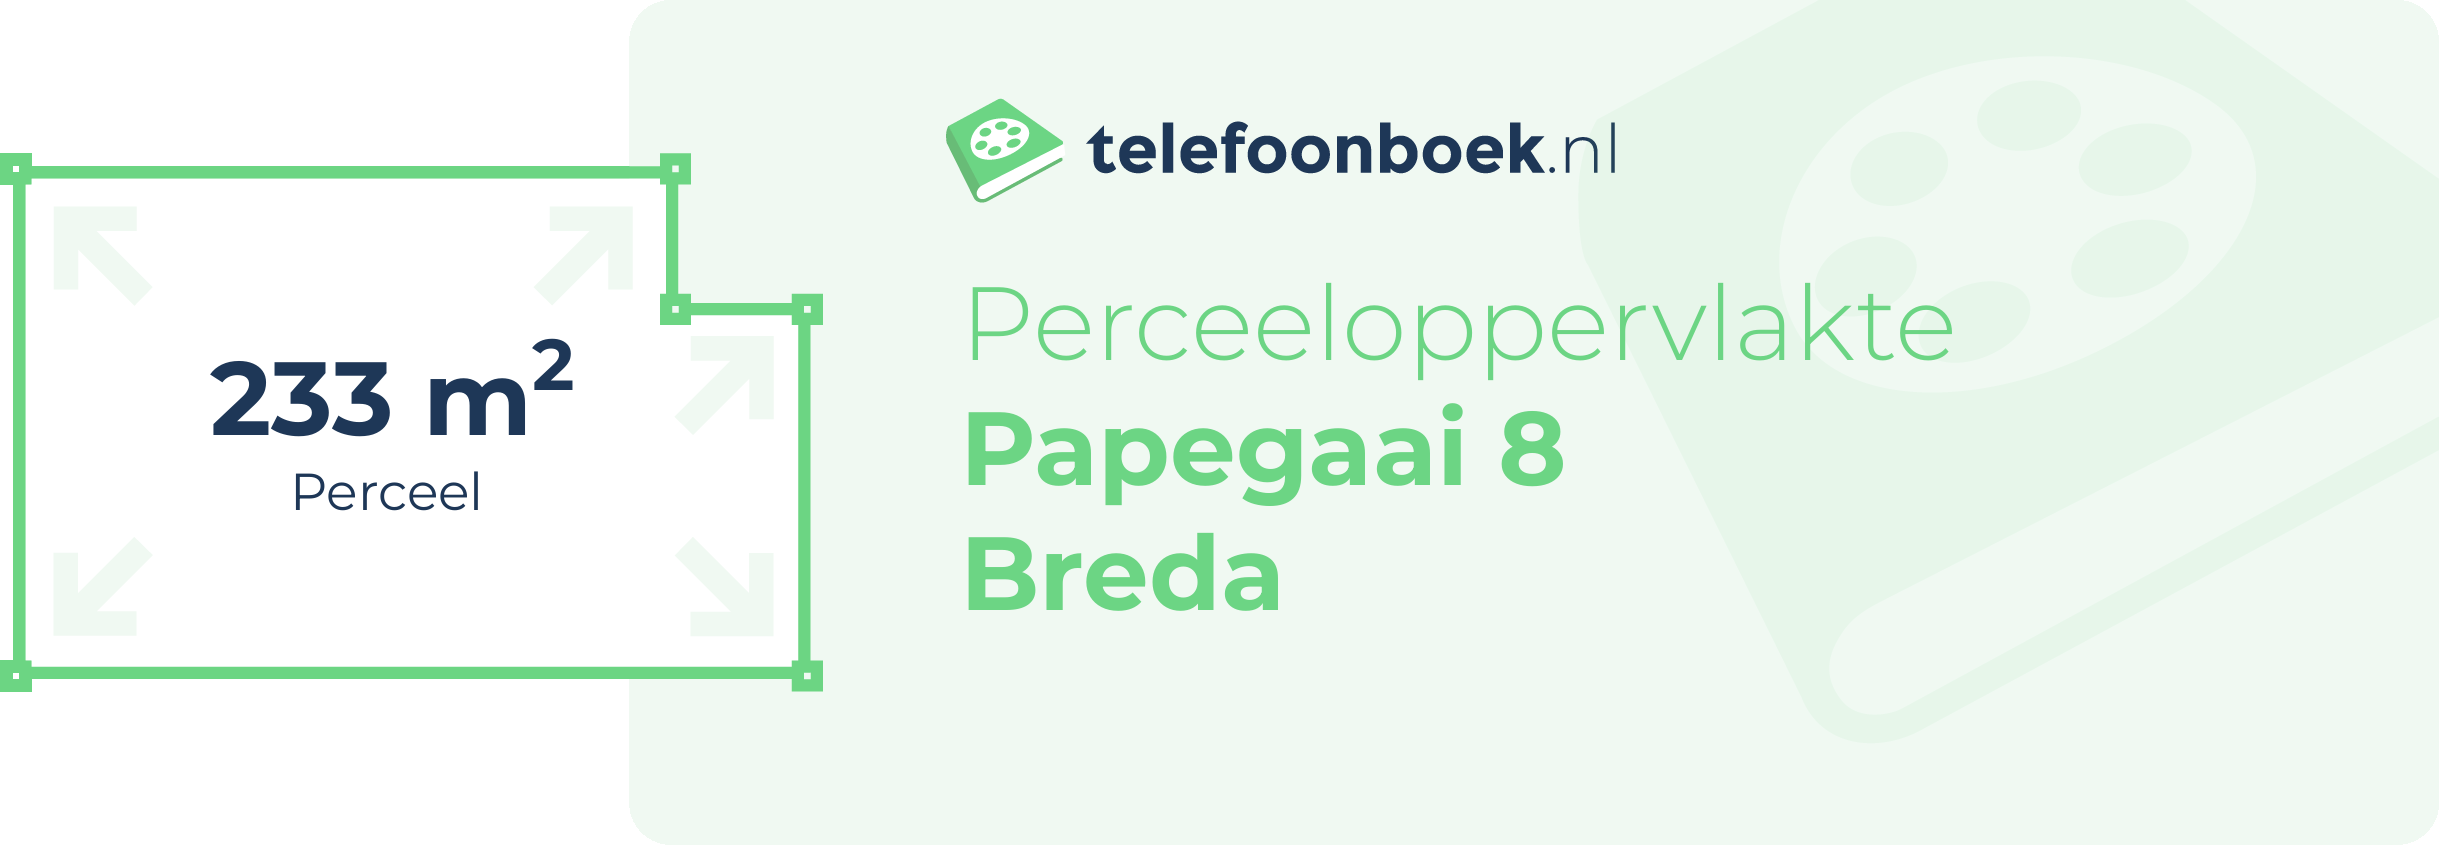 Perceeloppervlakte Papegaai 8 Breda